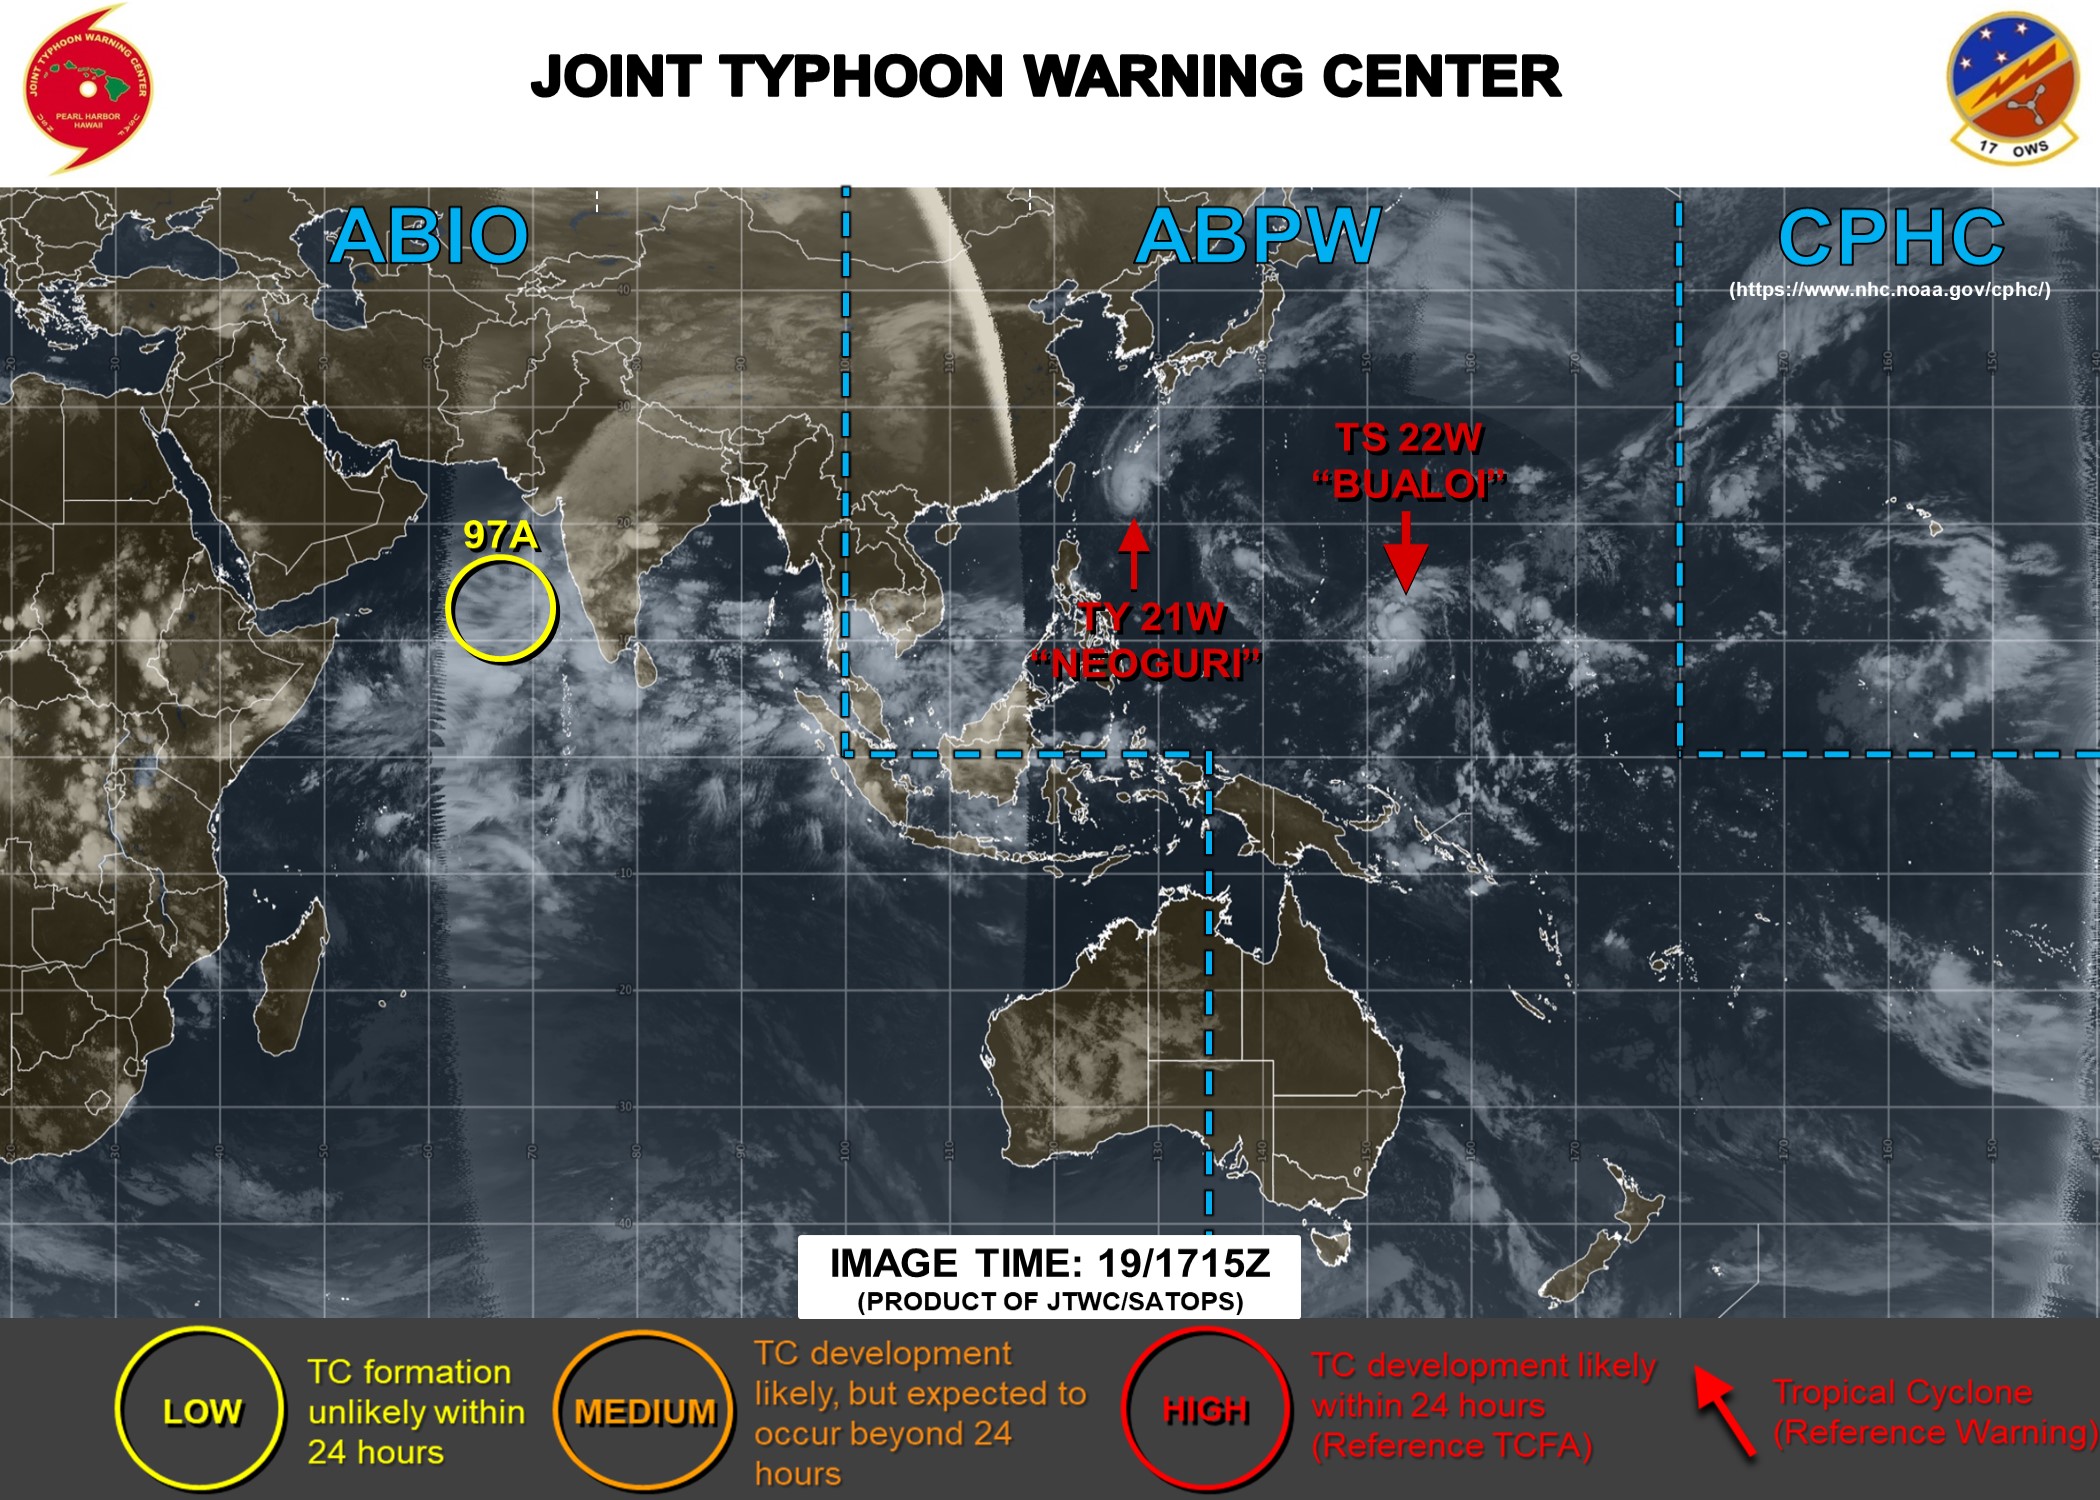 Typhoon Neoguri(21W) strong cat 2 has peaked. Bualoi(22W) gradually intensifying